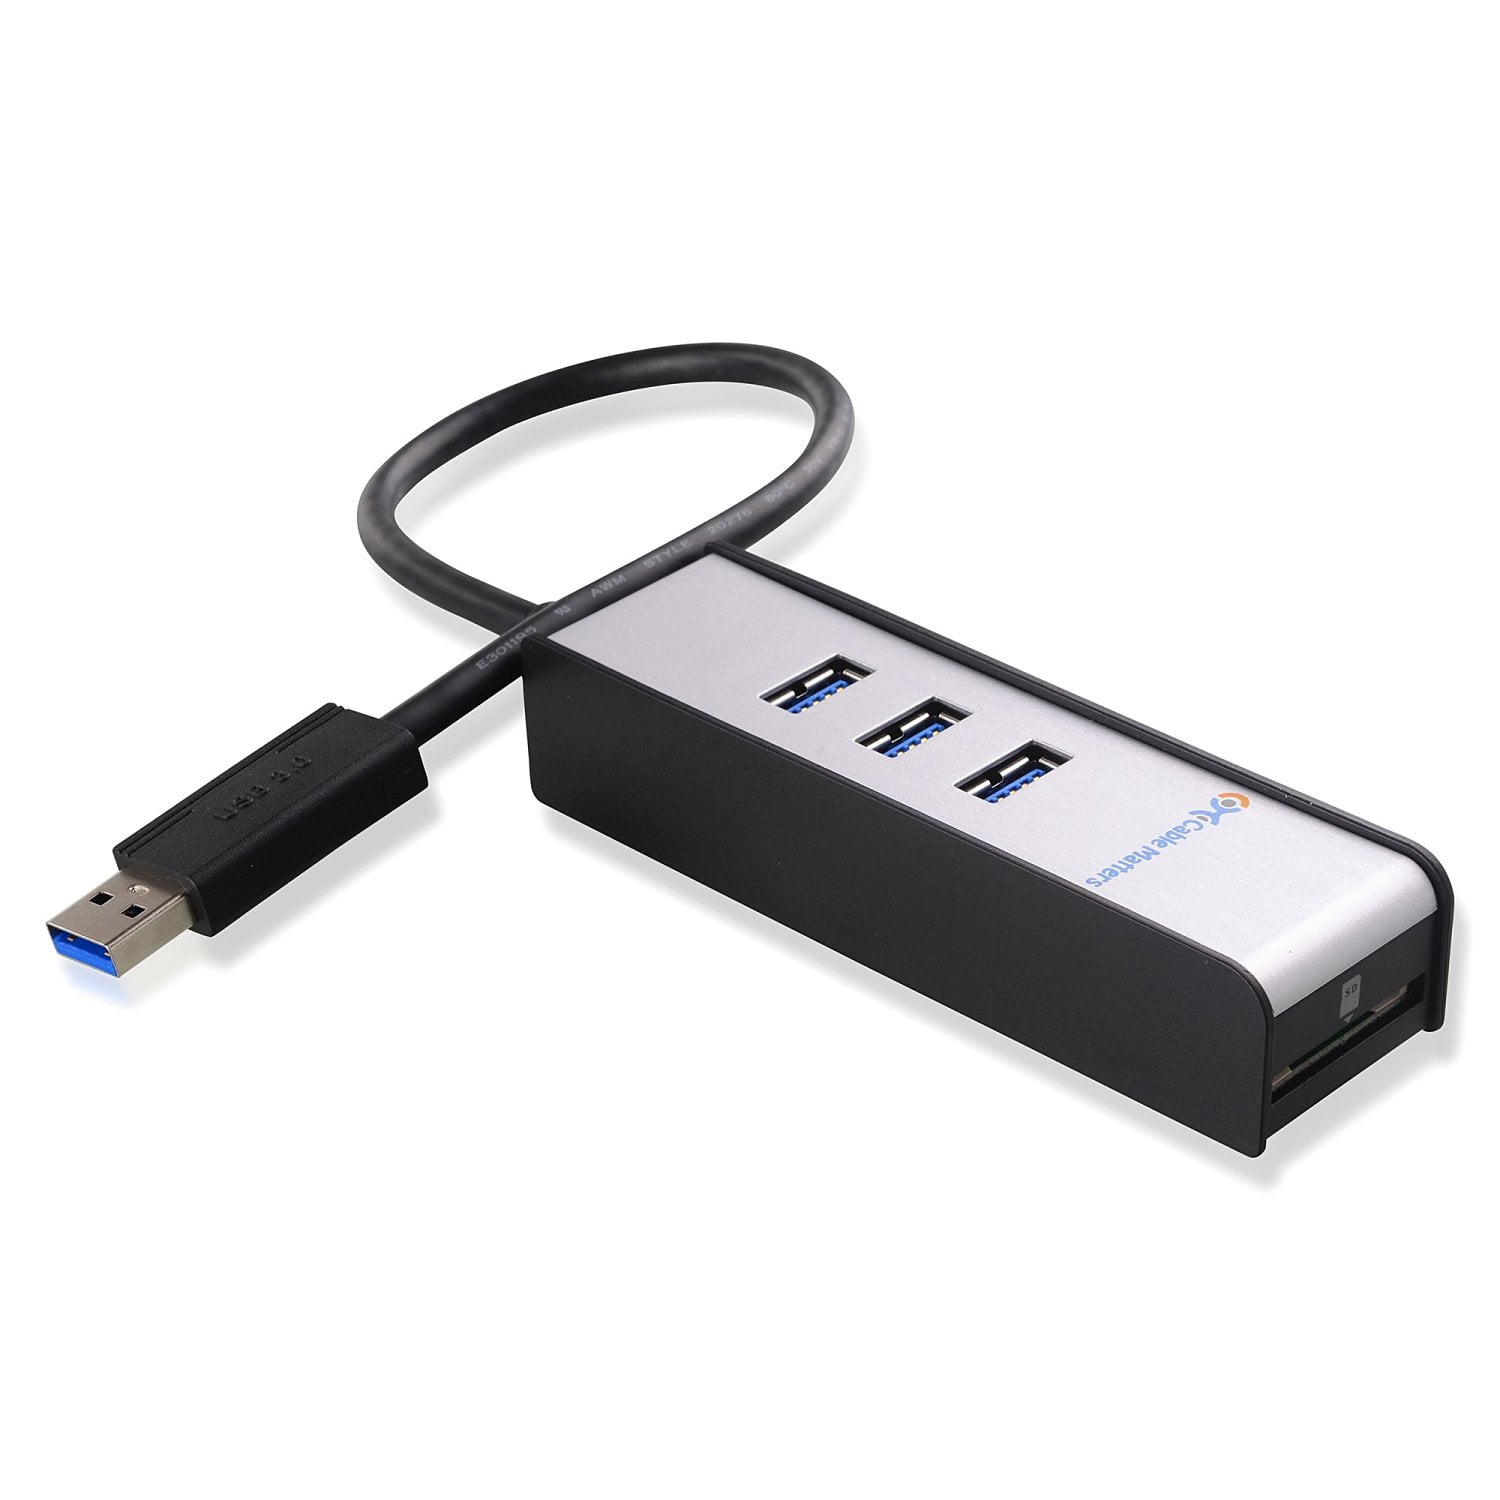 Скорость usb 1. Super-Speed USB 3.0 Card Reader. Адаптер SUPERSPEED USB 3.0. Хаб USB 3.0 С питанием. I-Tec SUPERSPEED USB 3.0 Hub Adapter.